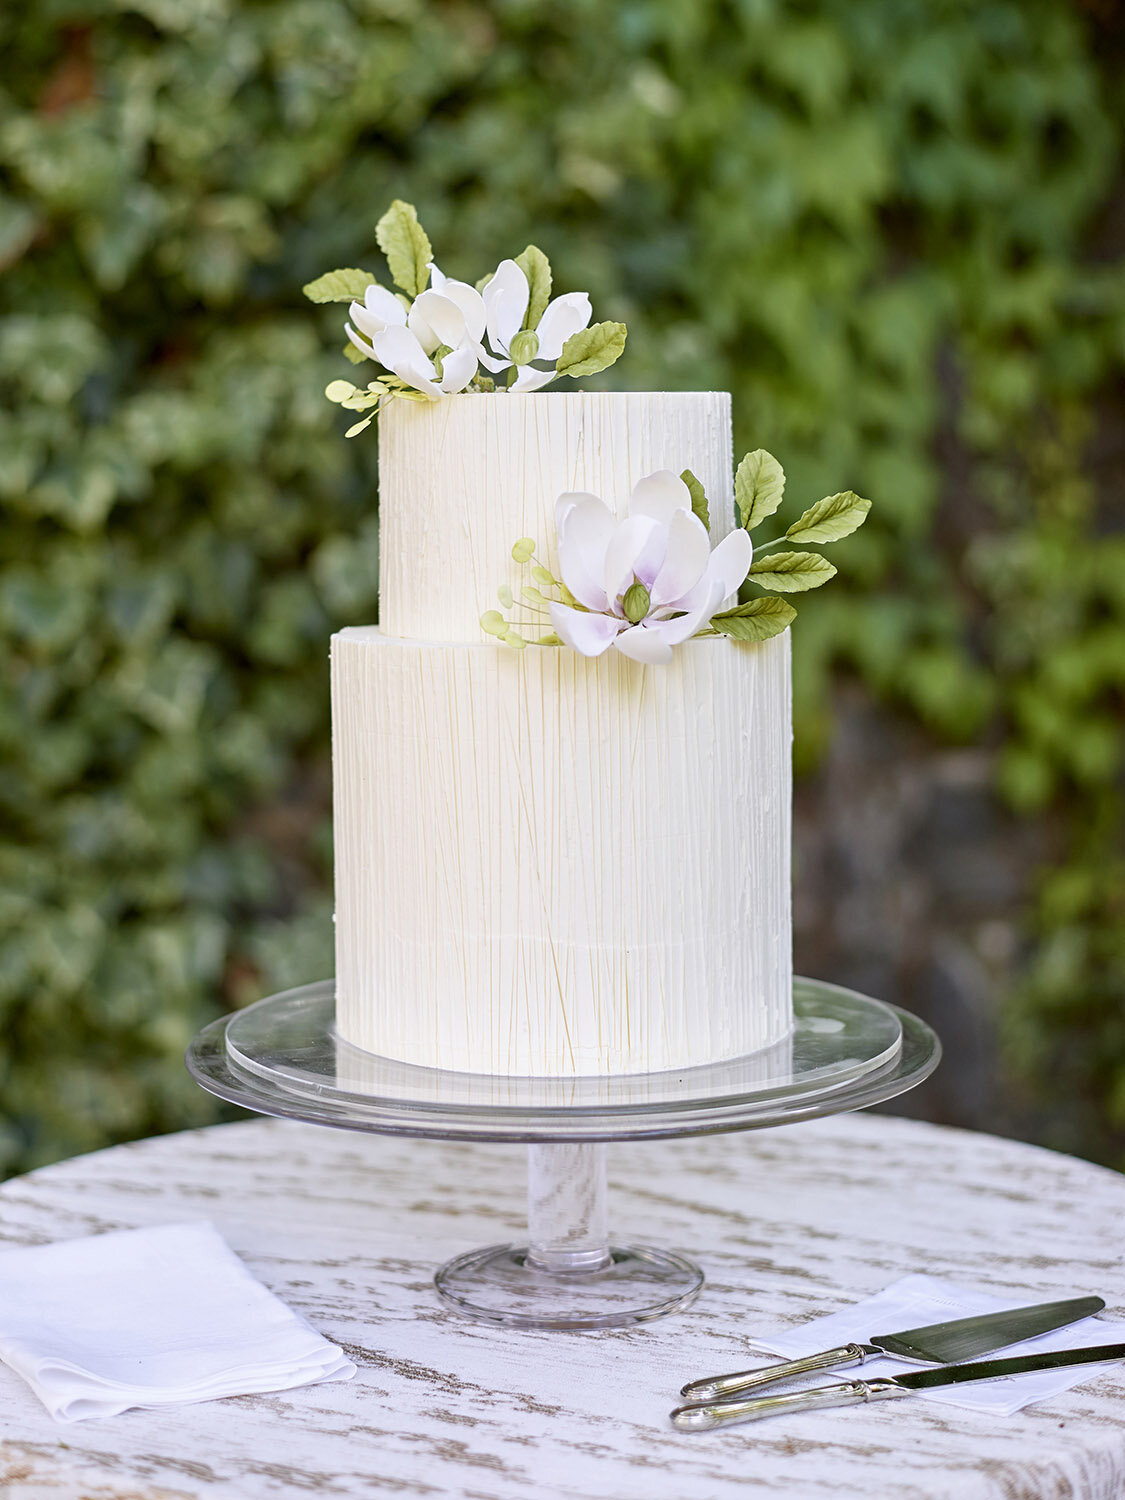 annadel-estate-elegant-sonoma-winery-wedding-simple-white-wedding-cake-large-base-2-tier